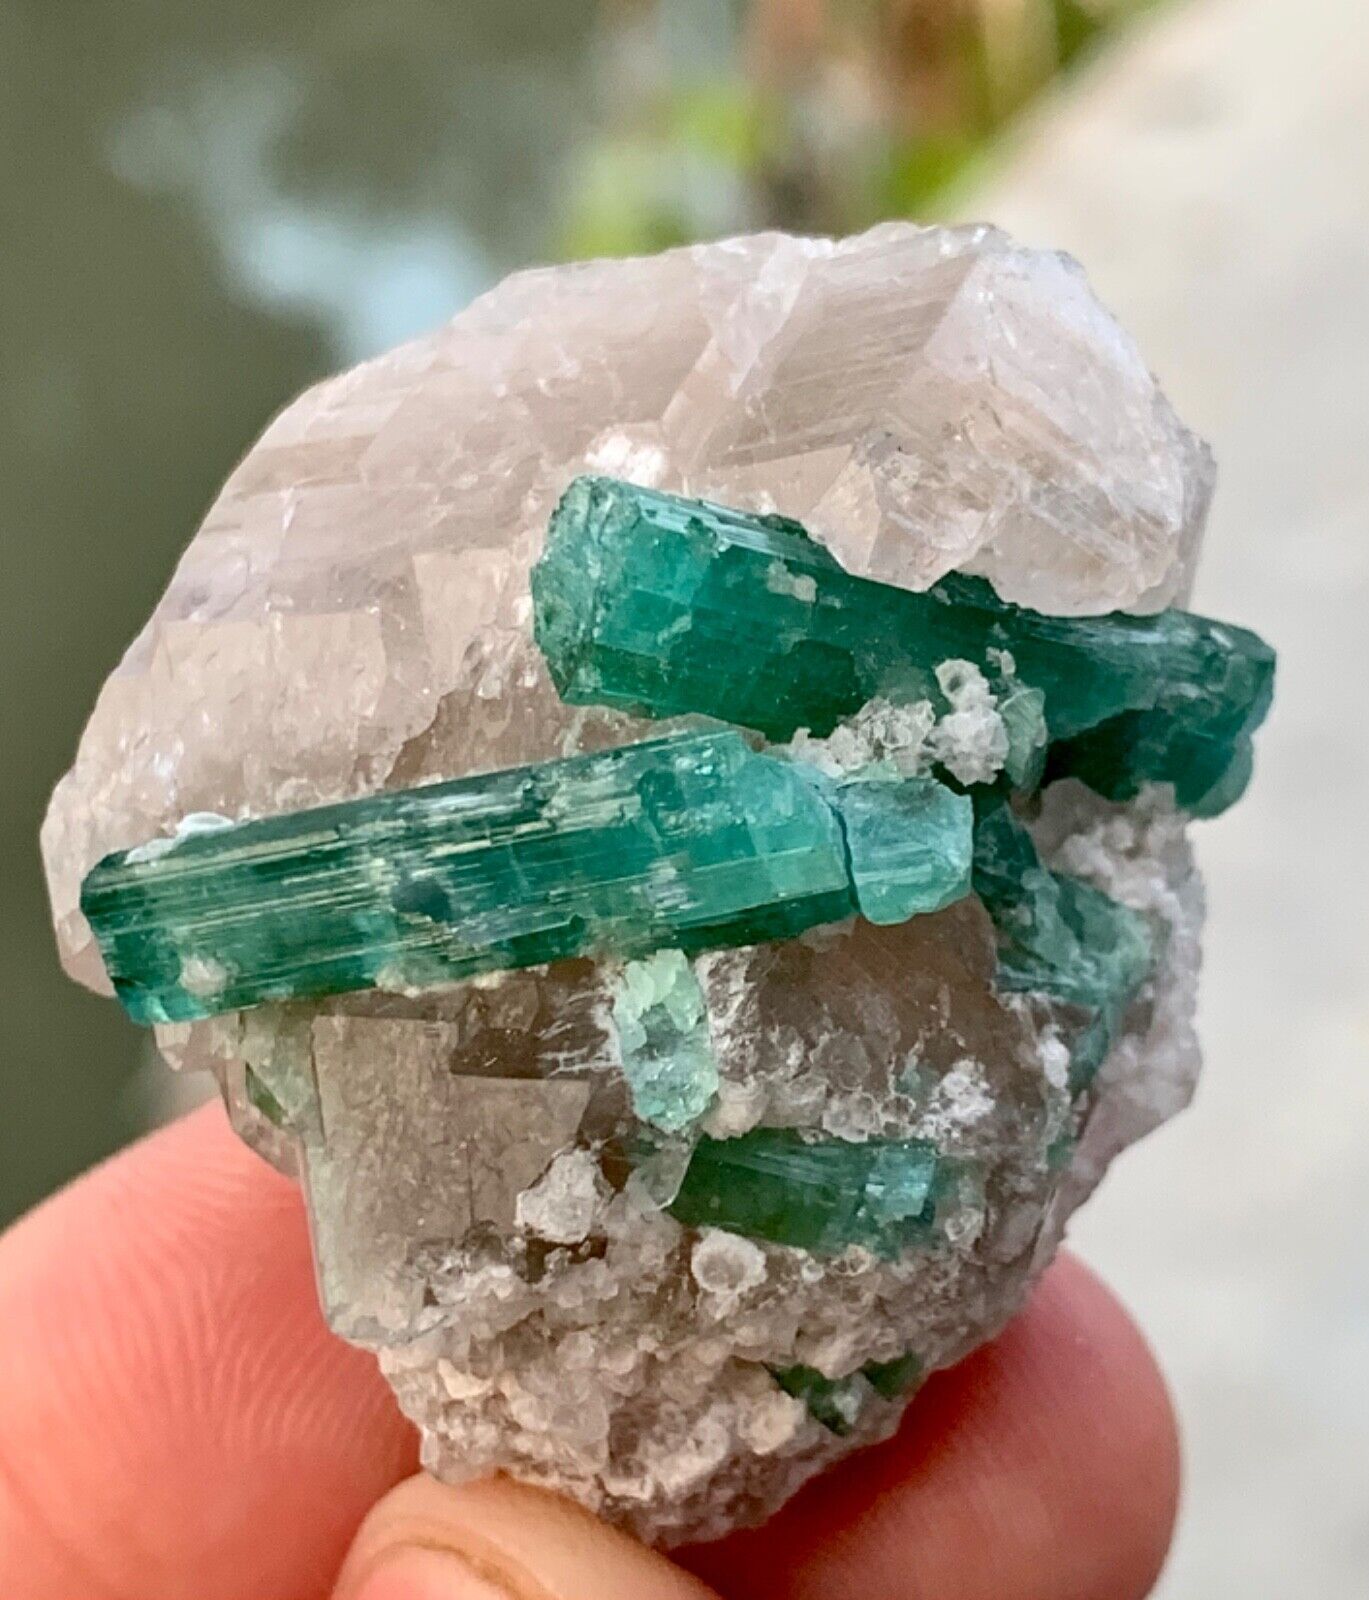 145 Carat Tourmaline Crystal On Quartz Specimen From Afghanistan